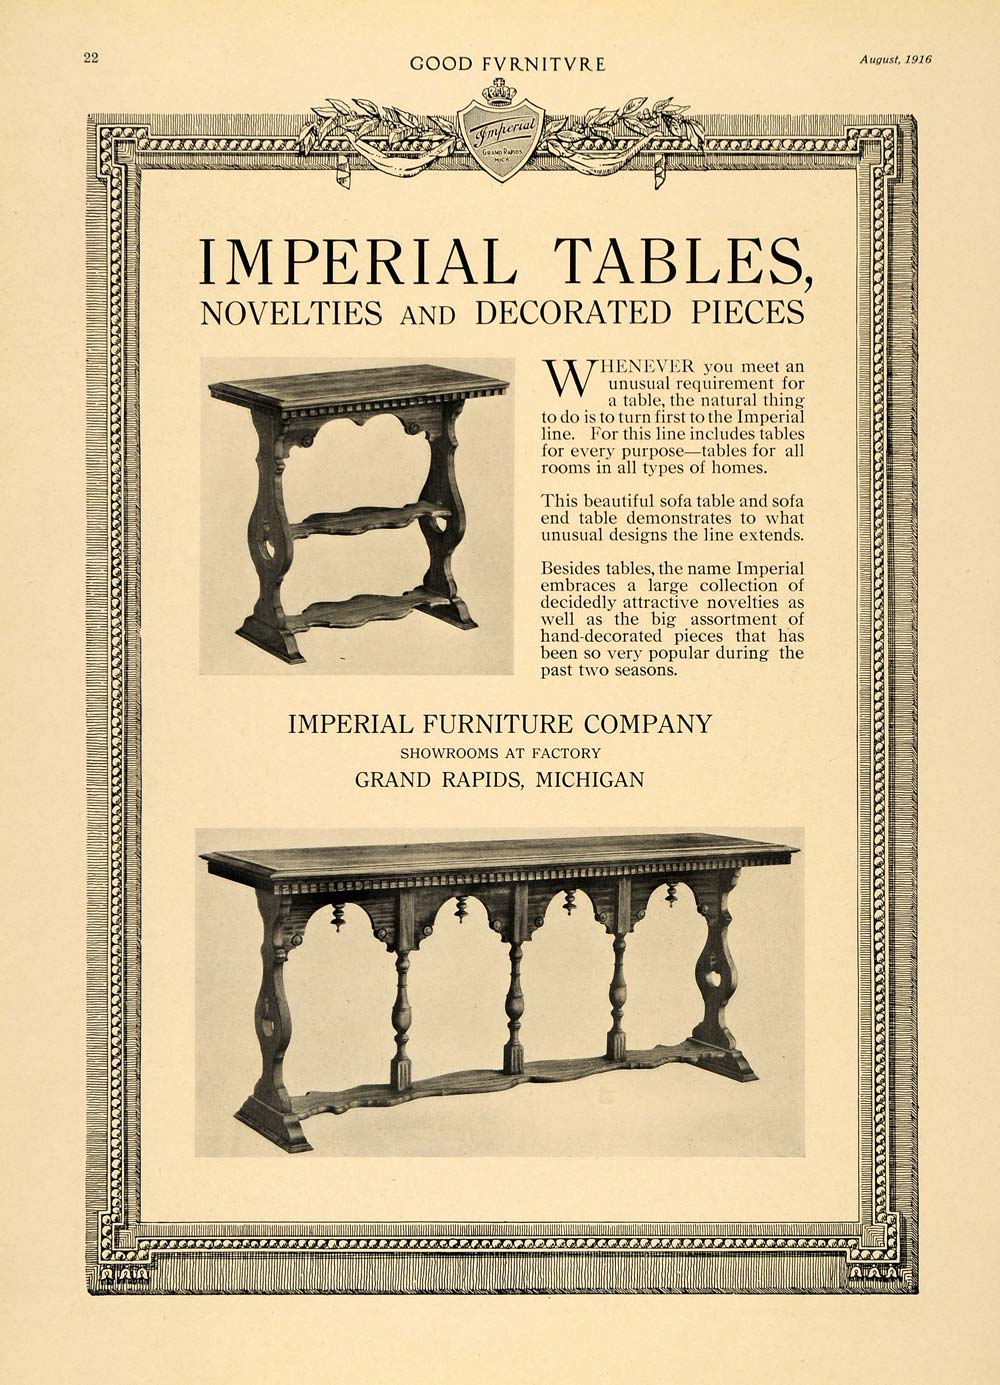 1916 Ad Sofa End Tables Imperial Furniture Company Deco - ORIGINAL GF3